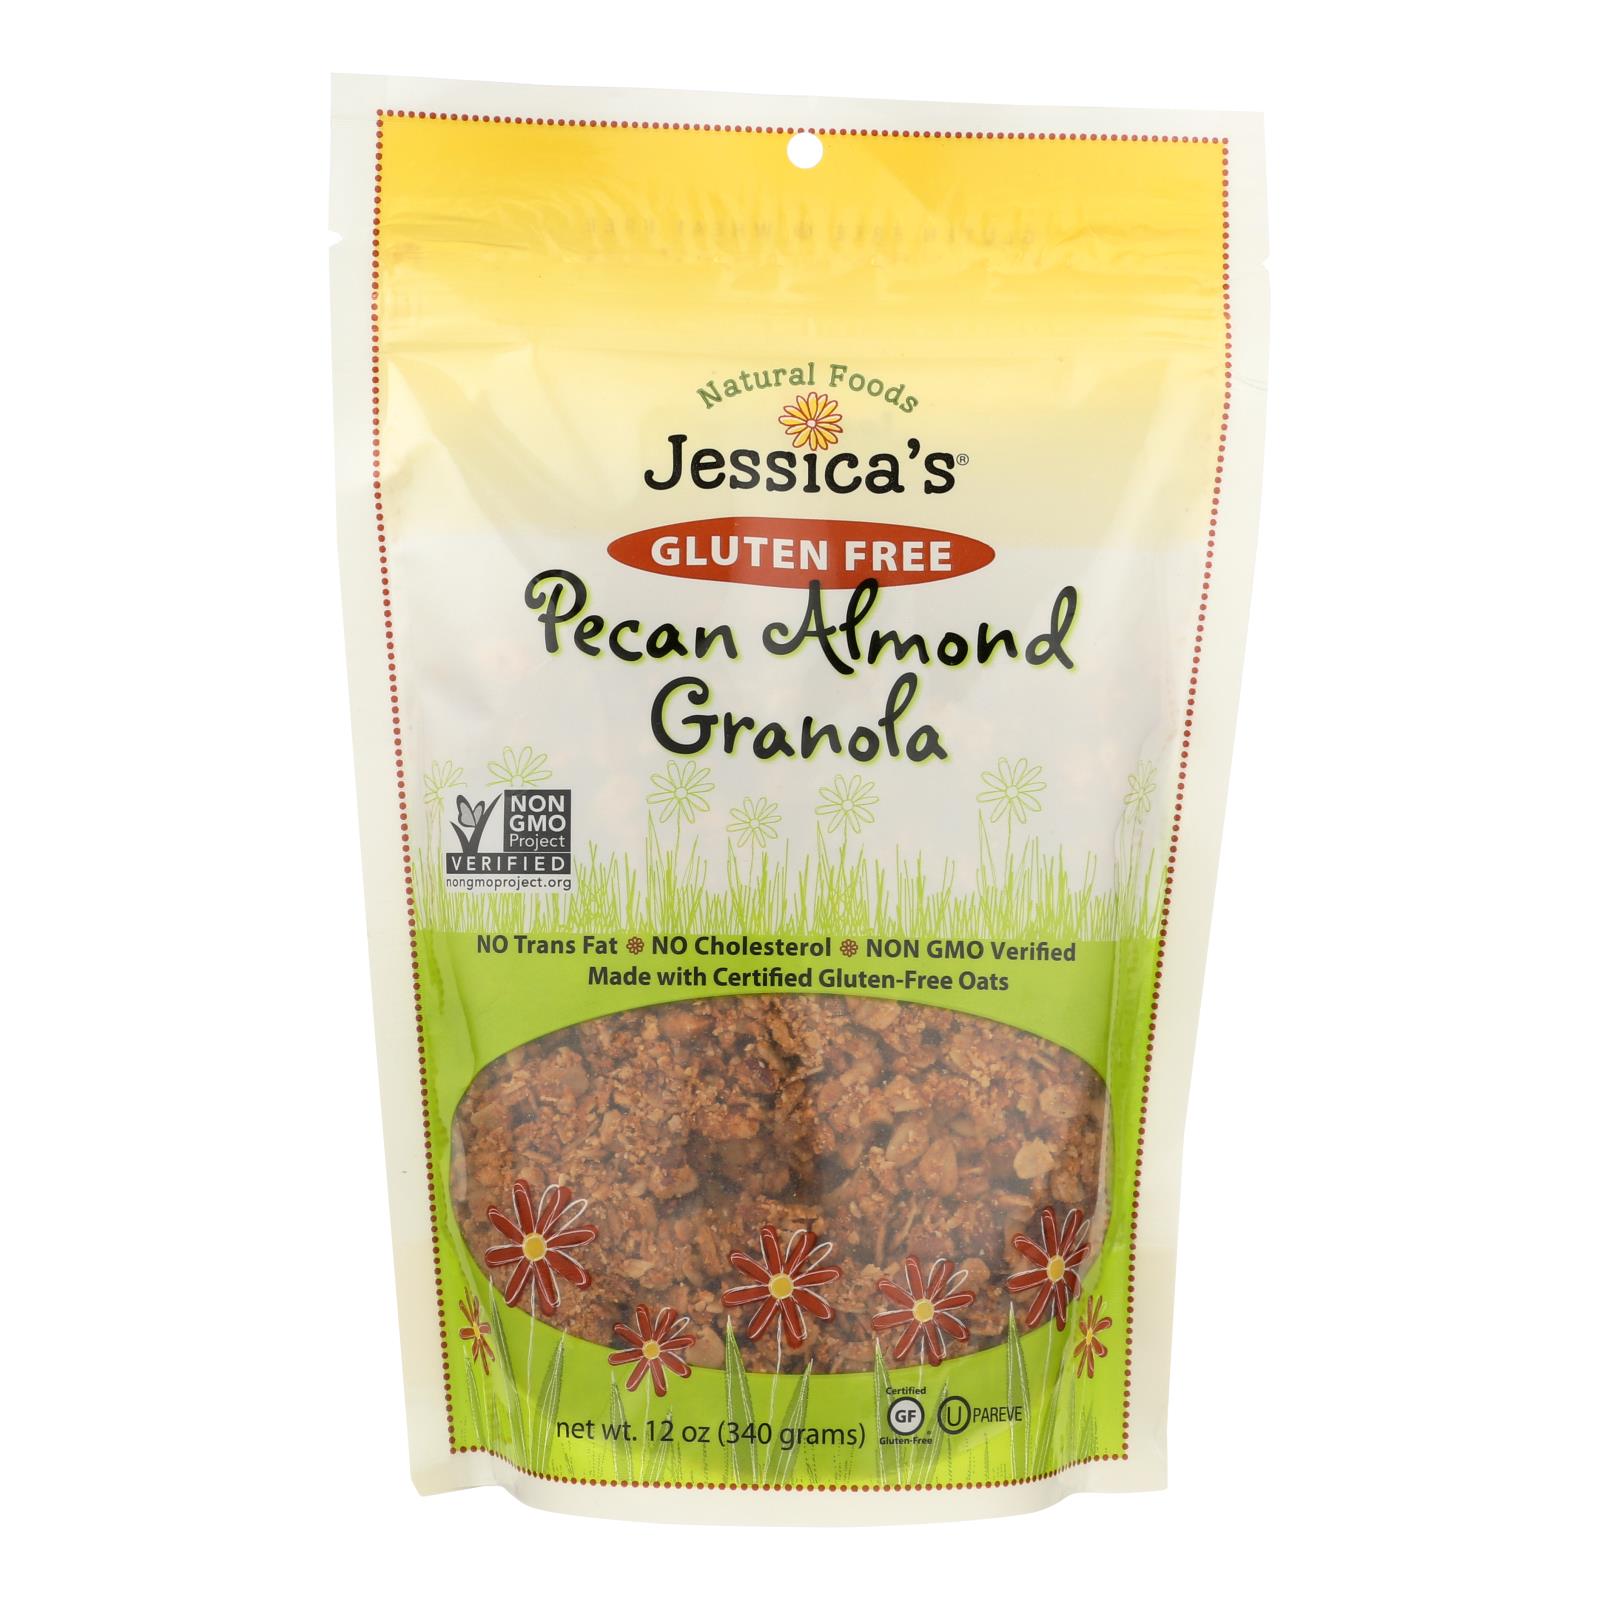 Jessica's Natural Foods Gluten Free Pecan Almond Granola - 12개 묶음상품 - 11 OZ